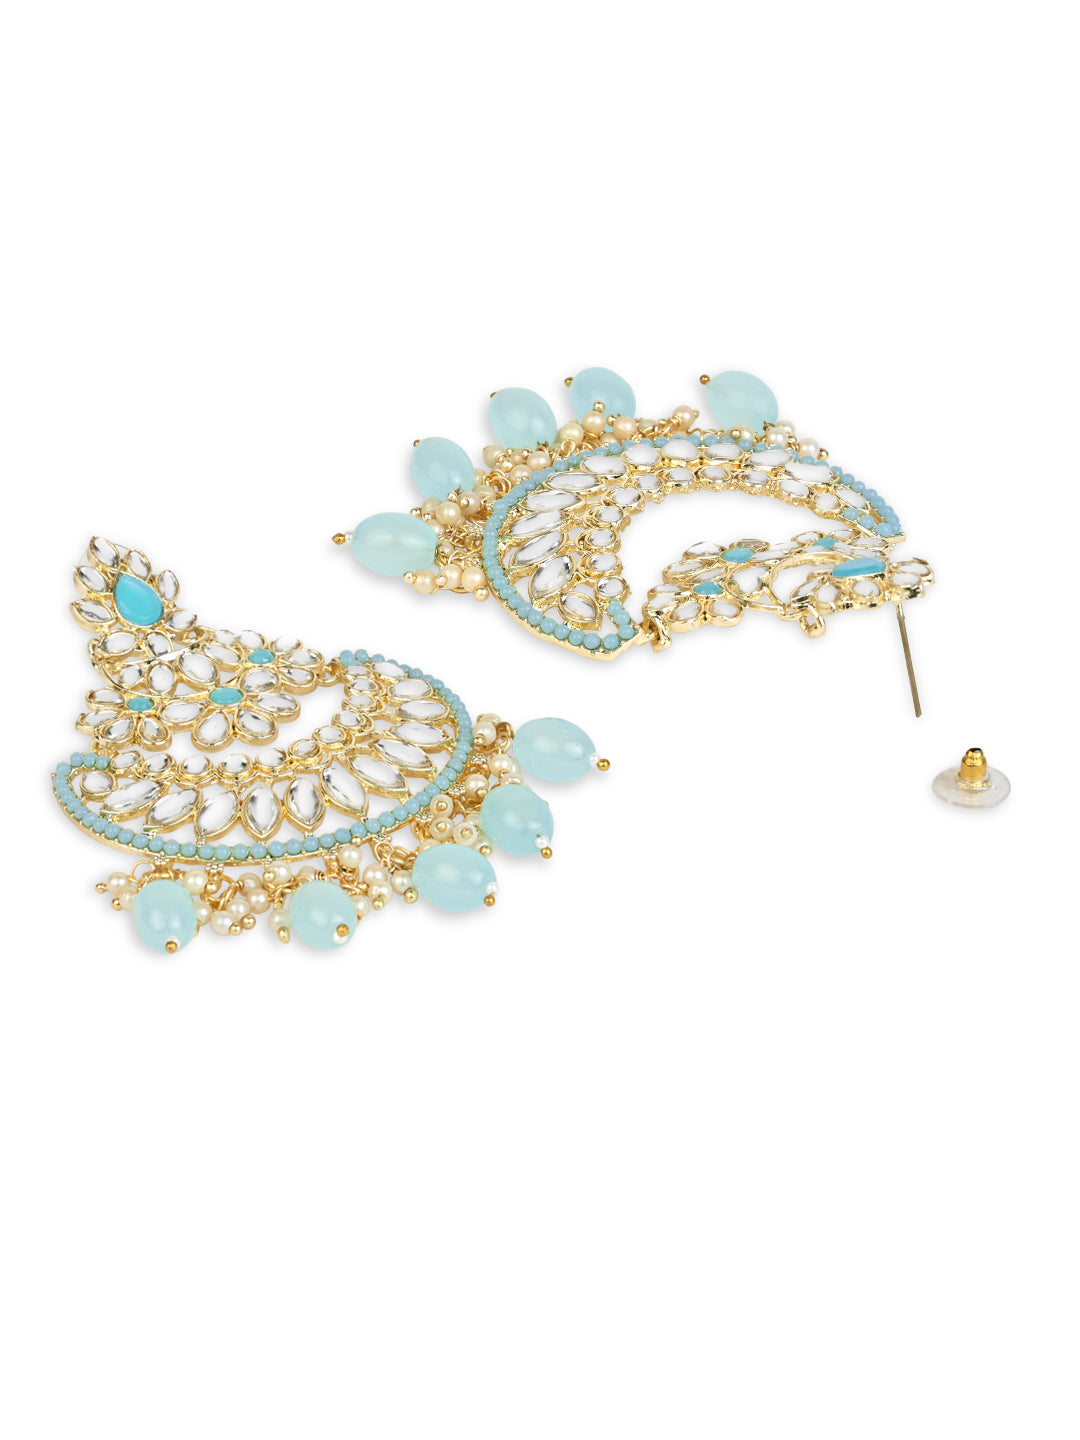 Women's 18K Gold Plated Traditional Handcrafted Pearl Kundan Beaded Chandbali Earrings (E3030Sb) - I Jewels